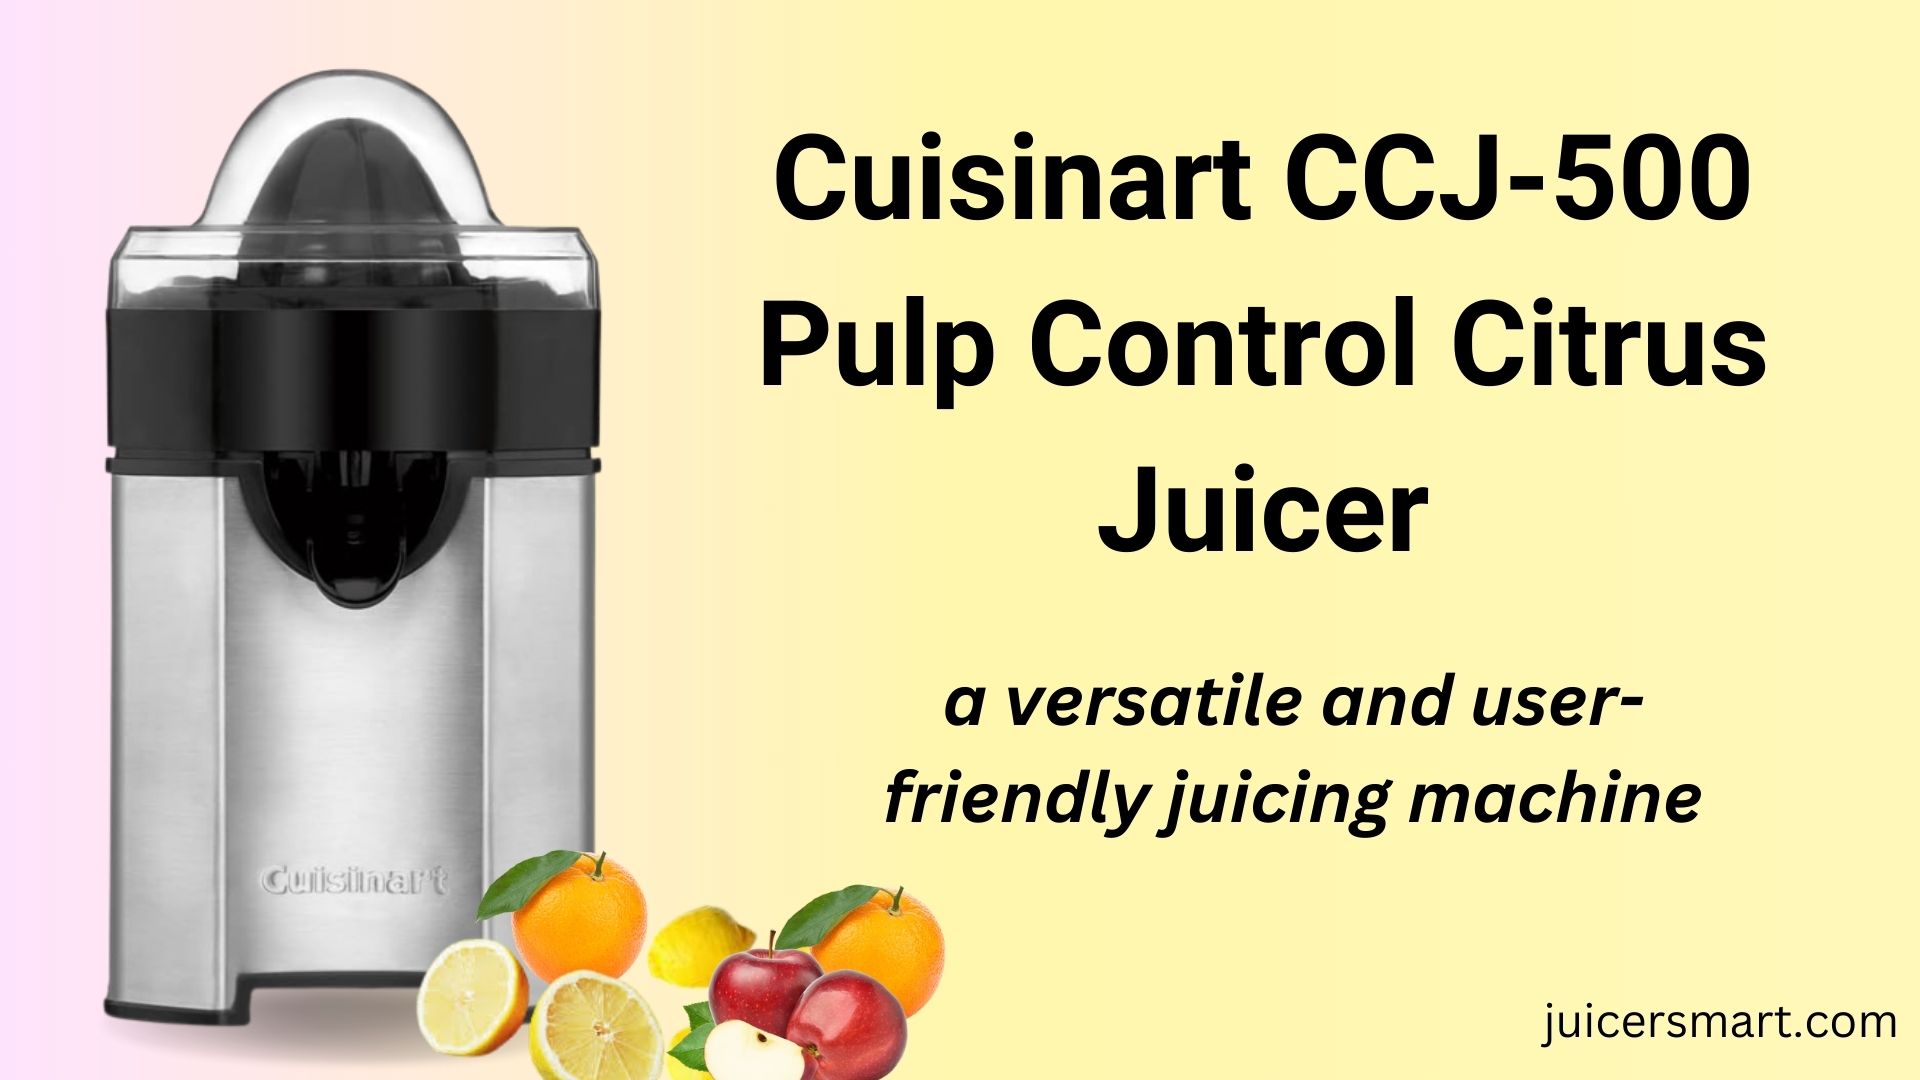 Cuisinart CCJ-500 Pulp Control Citrus Juicer